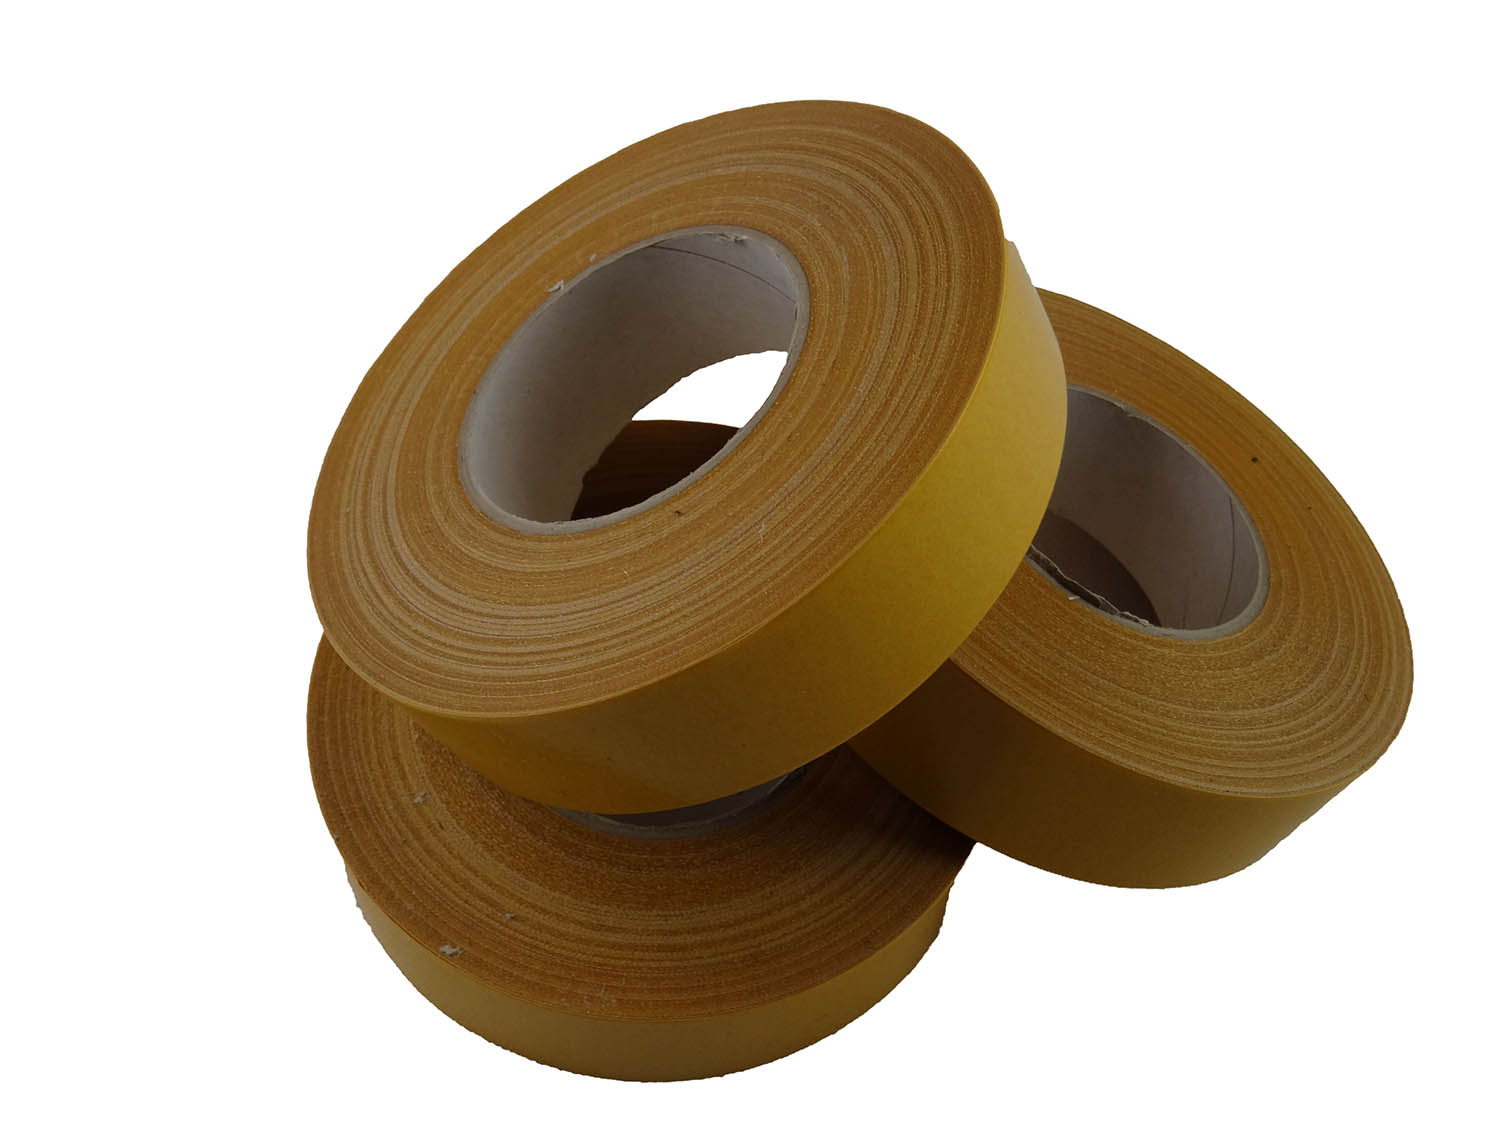 Trade fair fabric tape for easy fixing of trade fair flooring